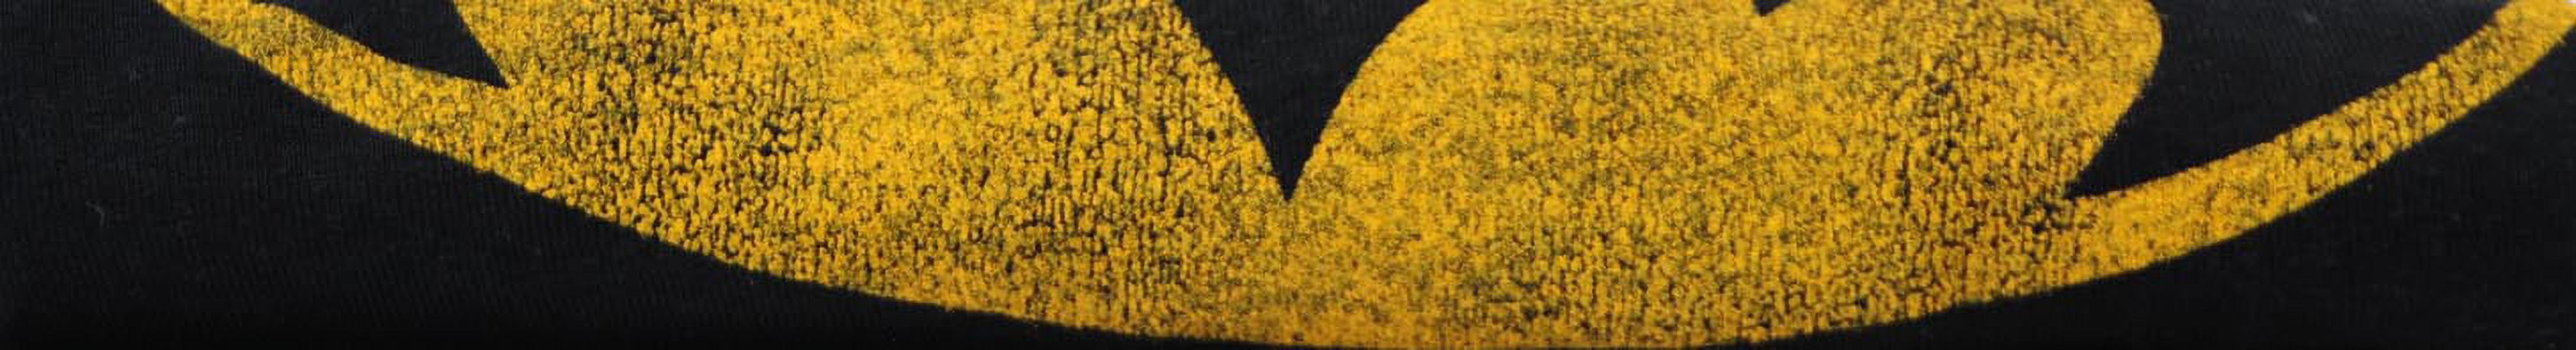 Batman distressed logo Men's tee shirt - image 4 of 4